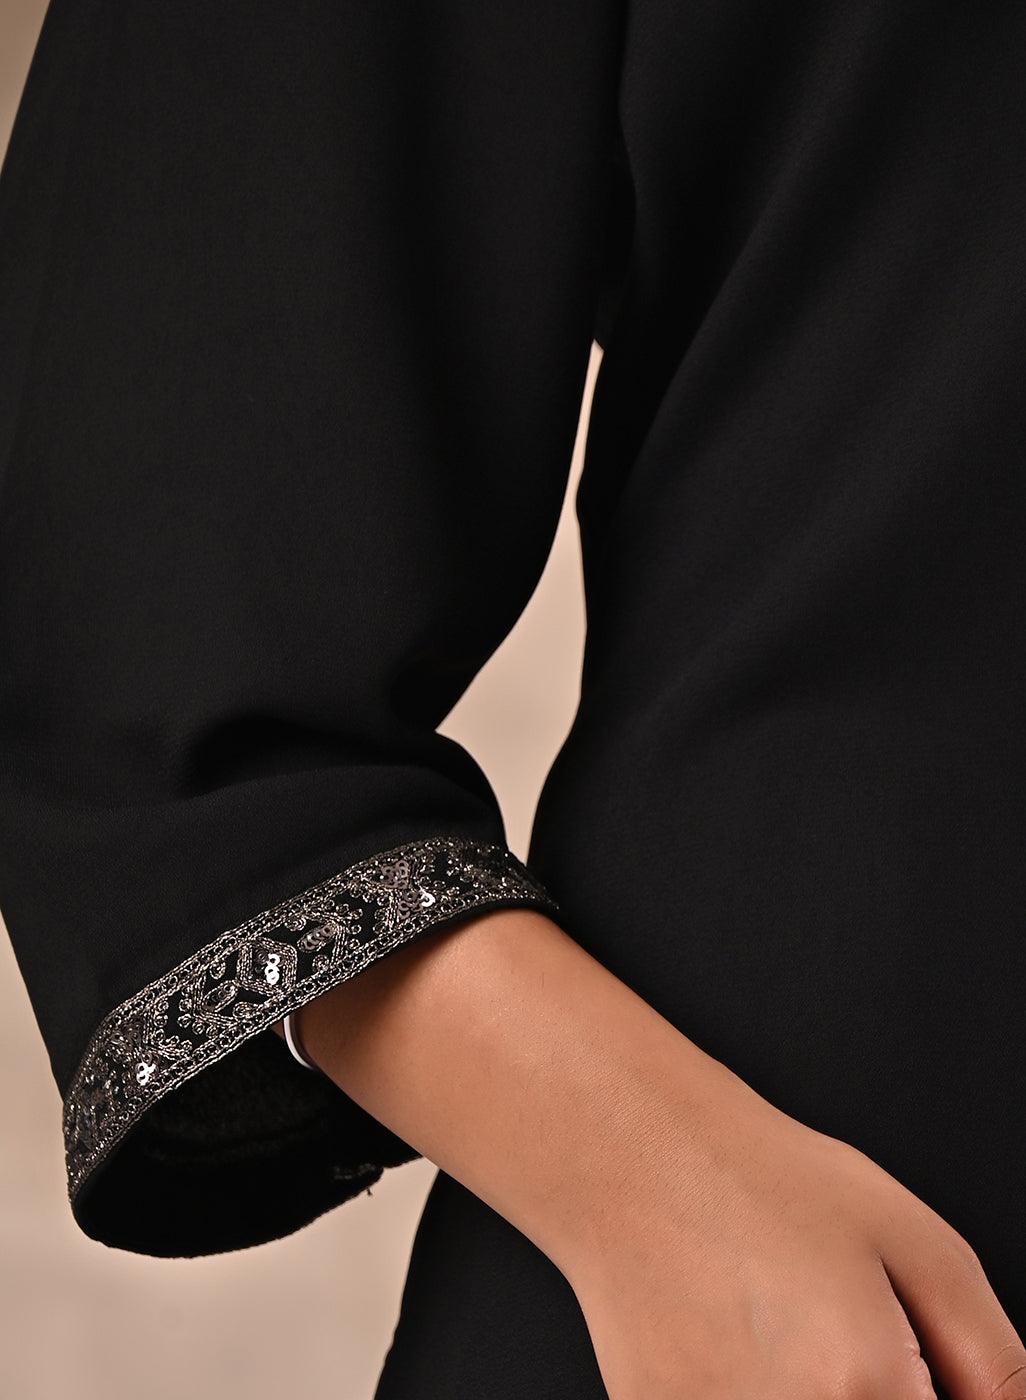 Black Kurta Set With Intricate Embroidery & Front Slit - Lakshita